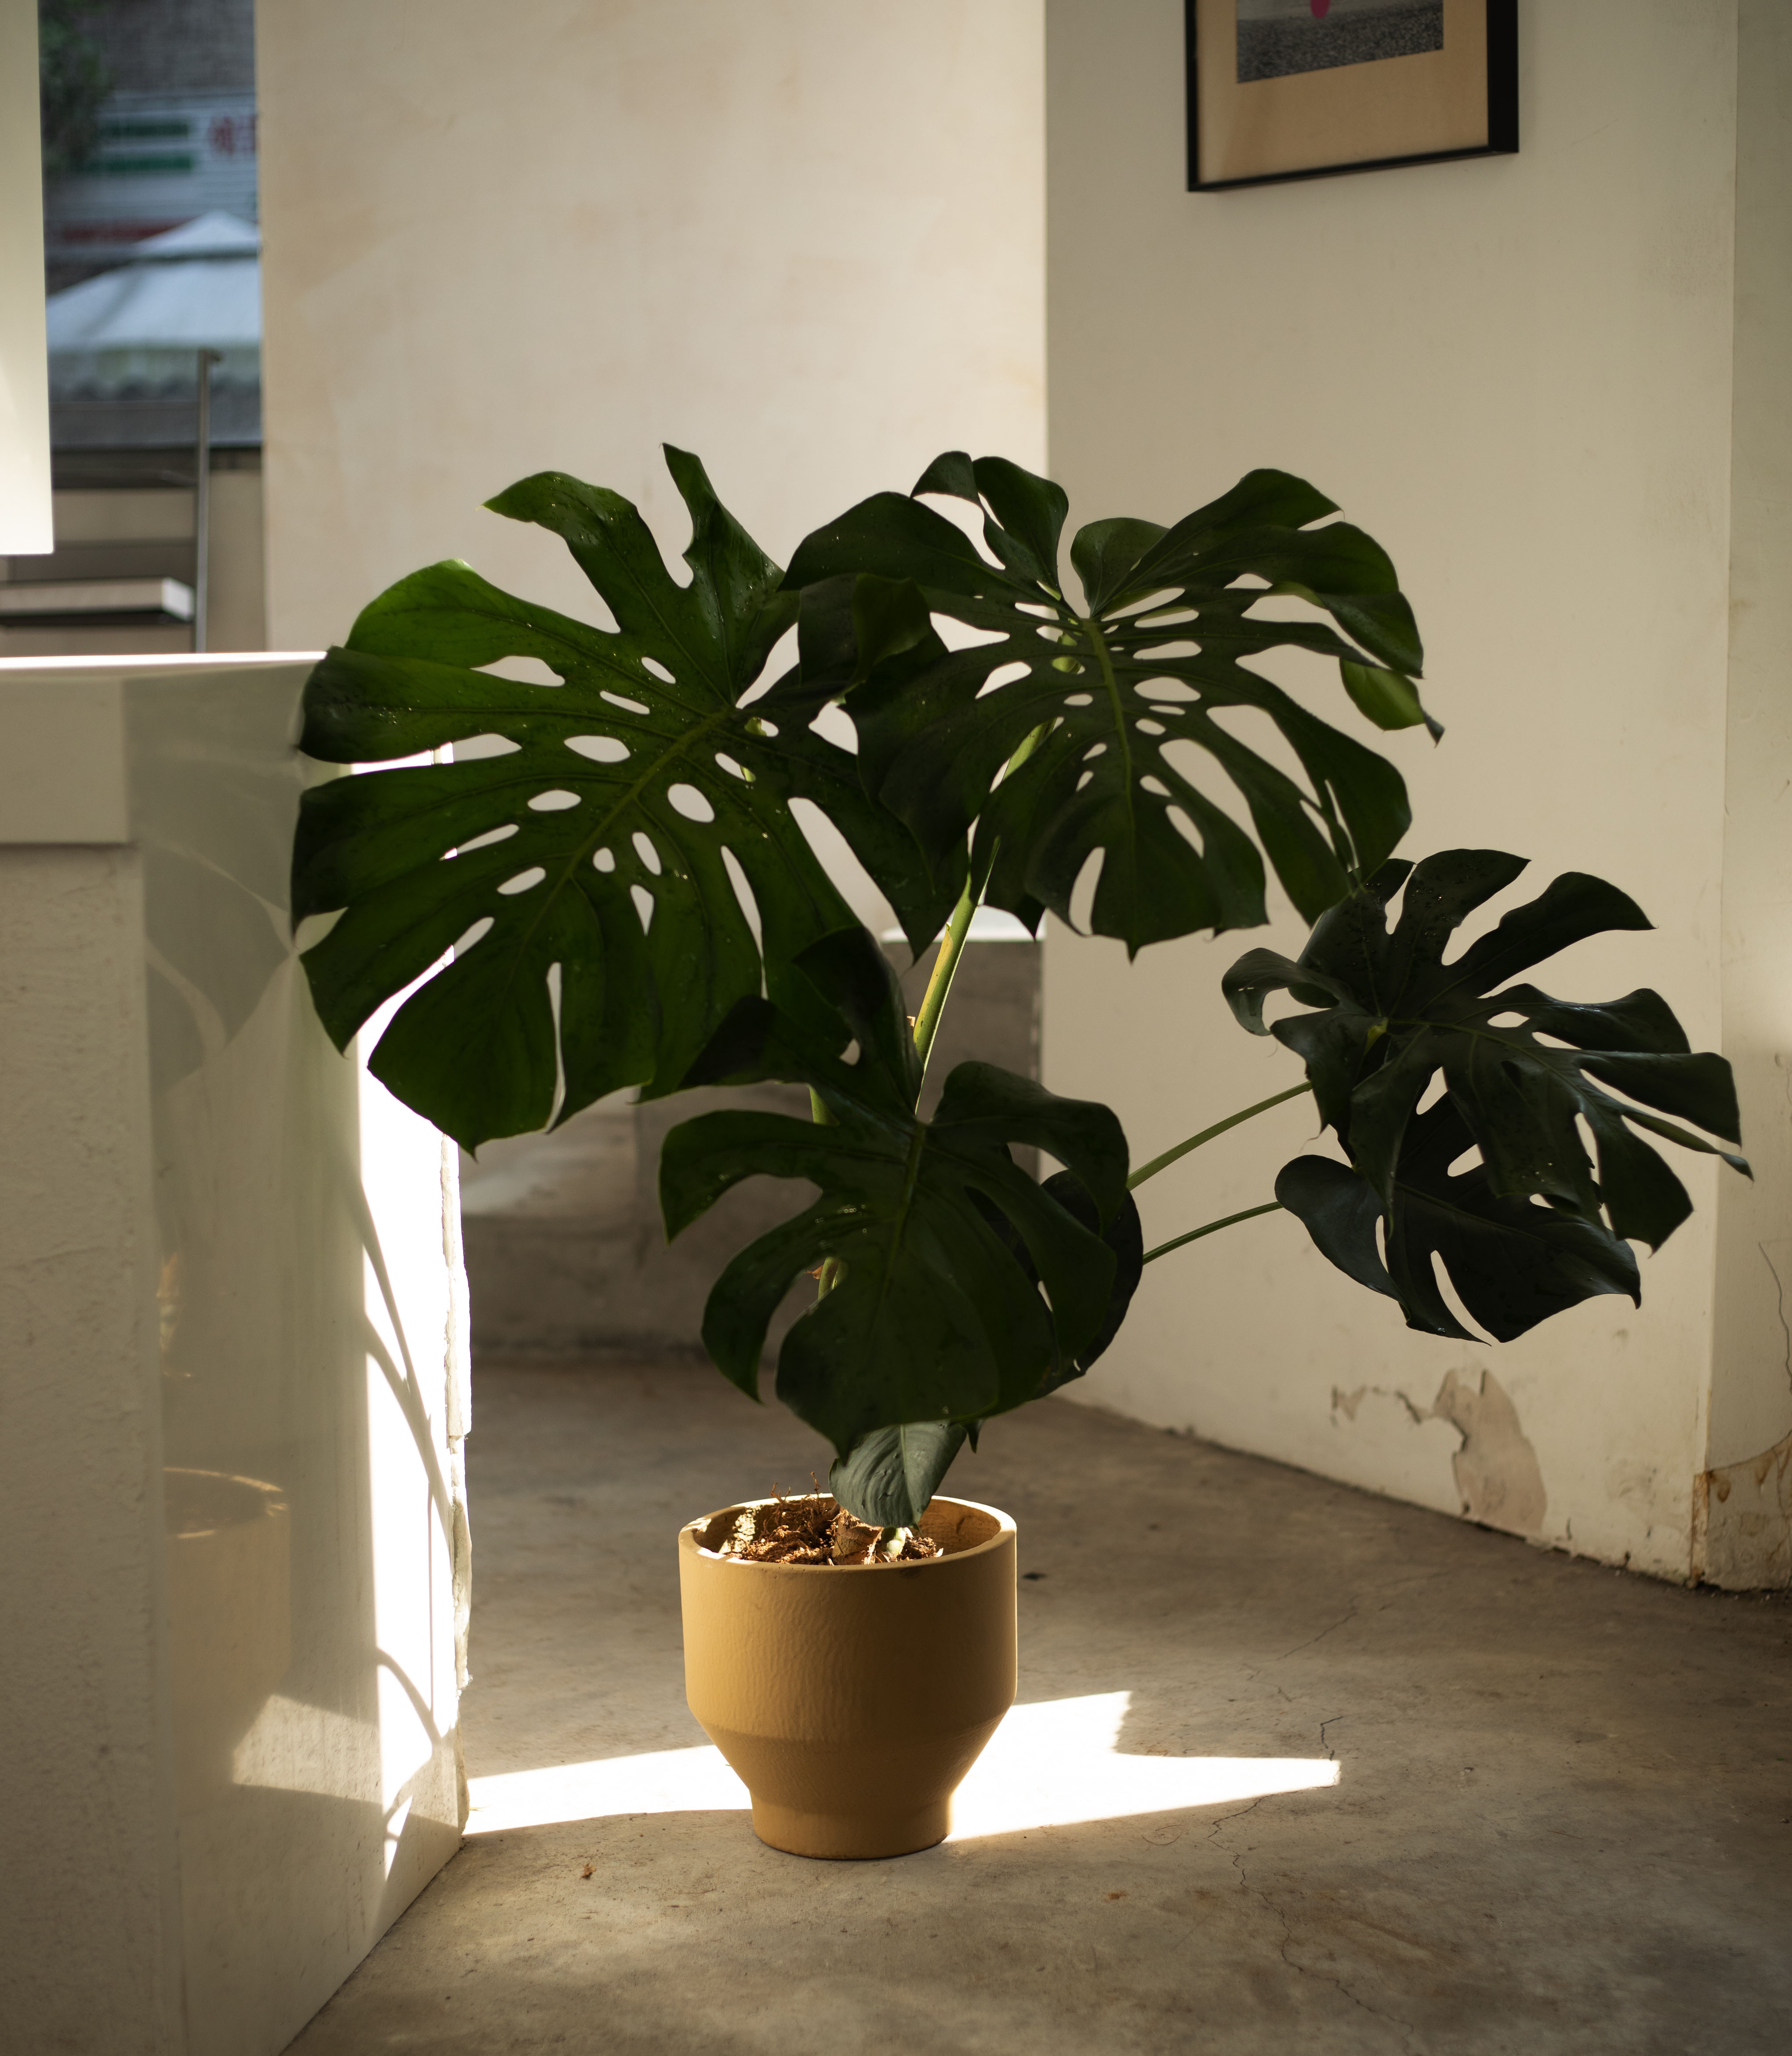 Earth plant巨叶龟背竹室内客厅盆栽落地大型绿植净化空气吸植物-封面